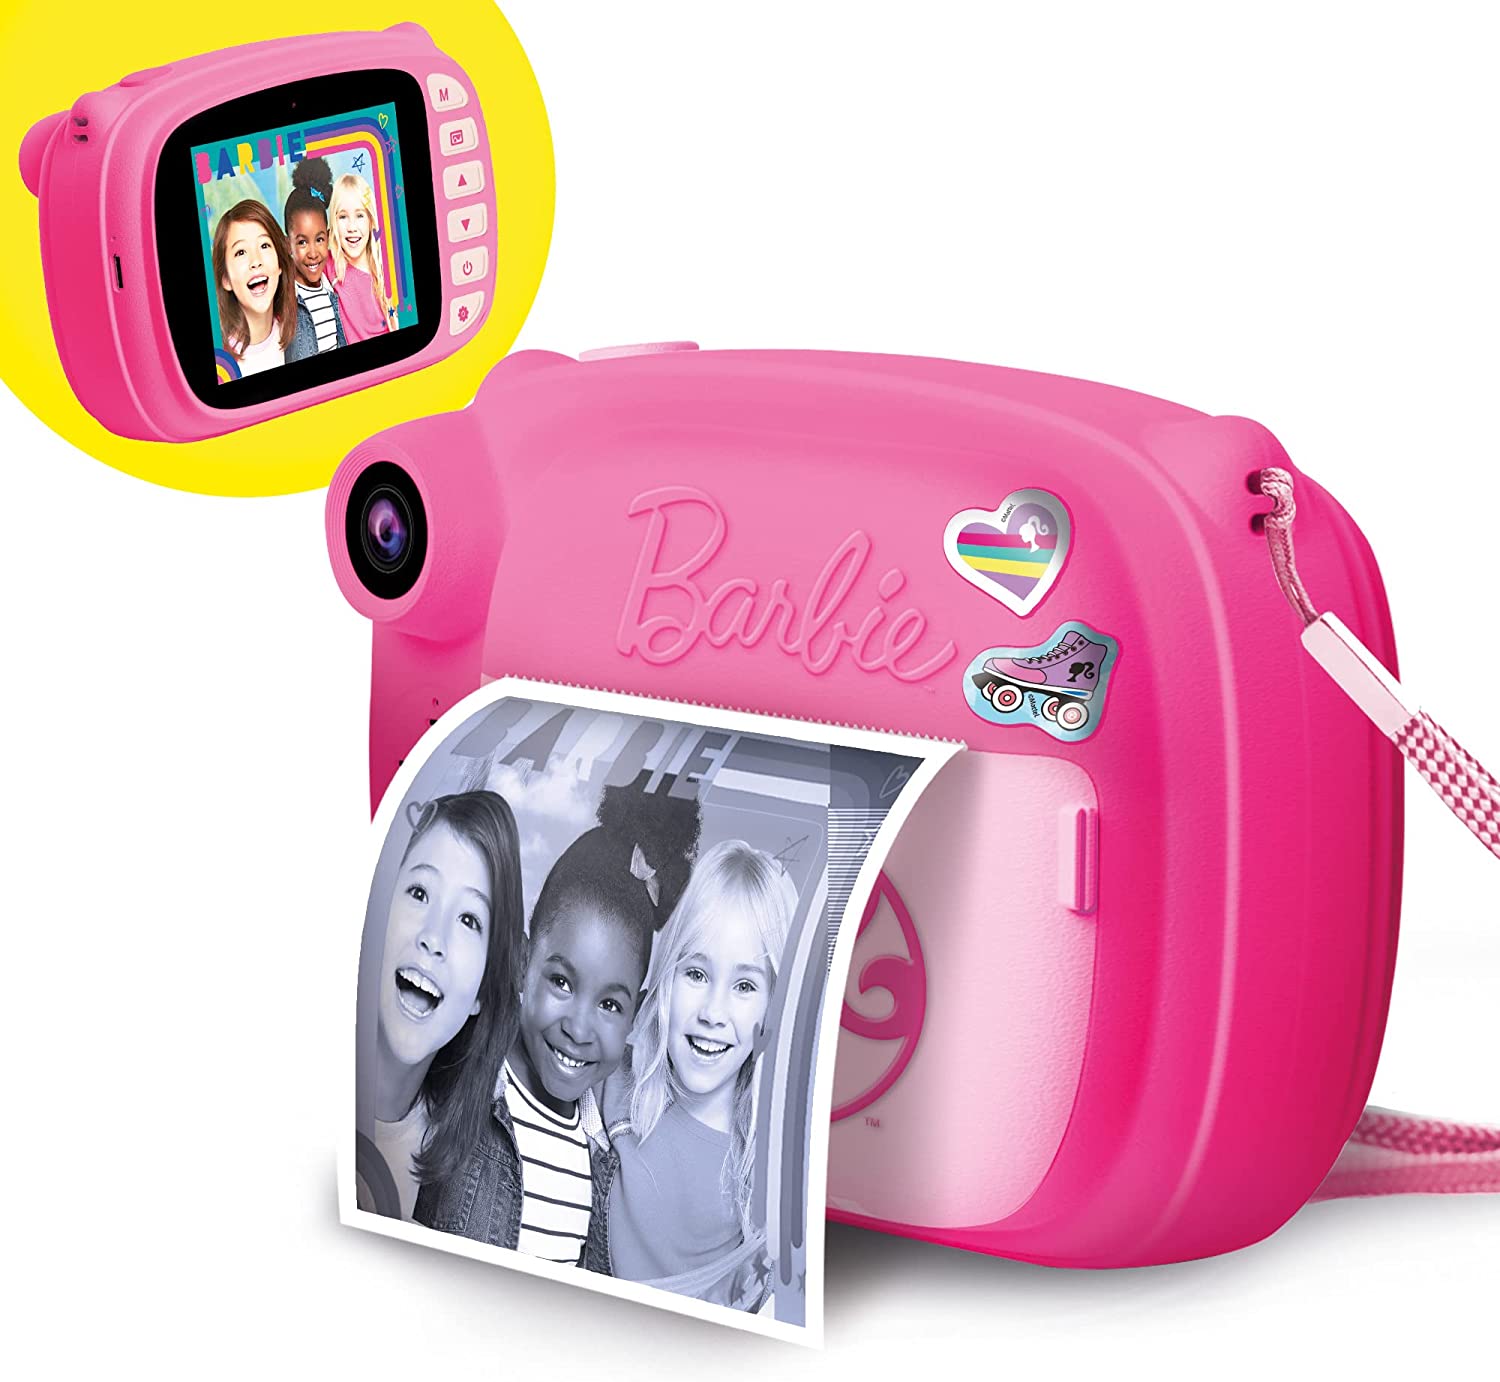 Lisciani Giochi - Barbie Print Cam Hi-Tech, Fotocamera Istantanea, Stampa  Subito Le tue Foto, Funzione Video e Selfie - LI97050